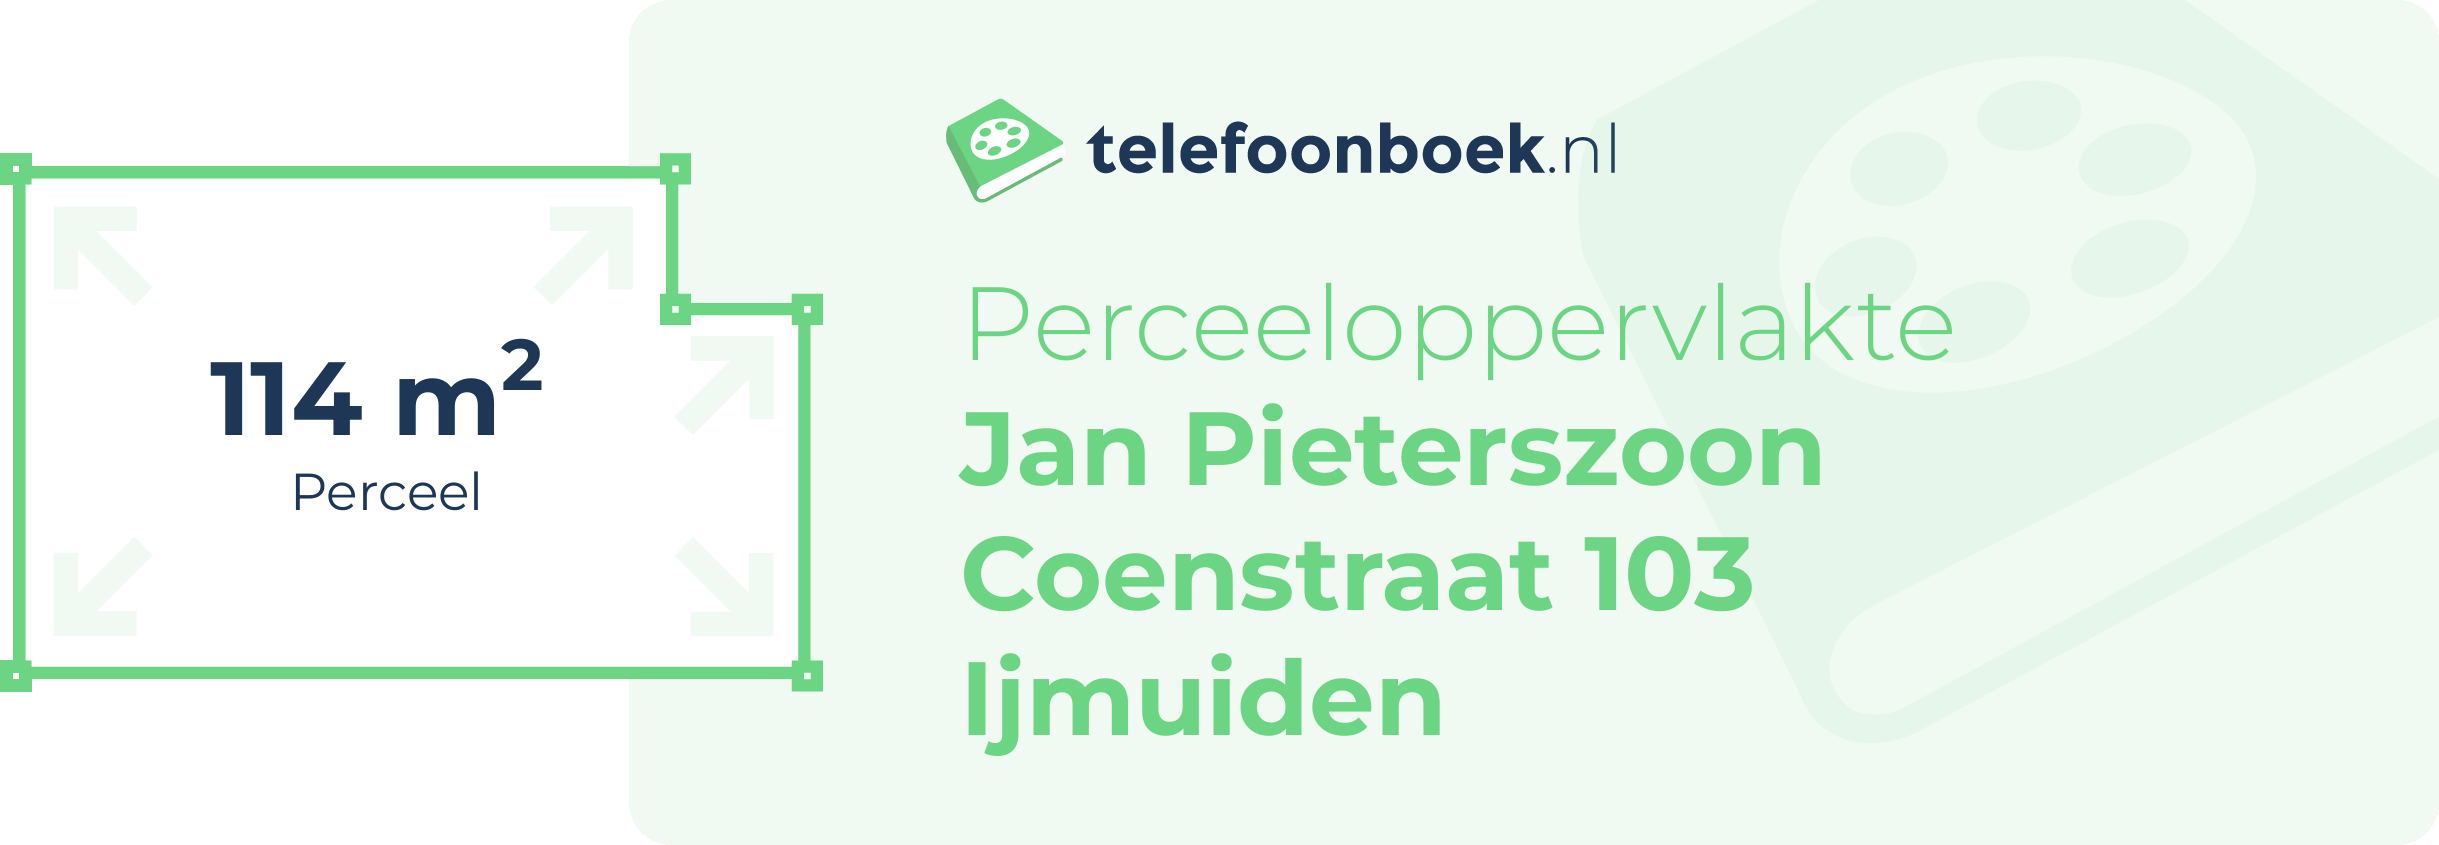 Perceeloppervlakte Jan Pieterszoon Coenstraat 103 Ijmuiden